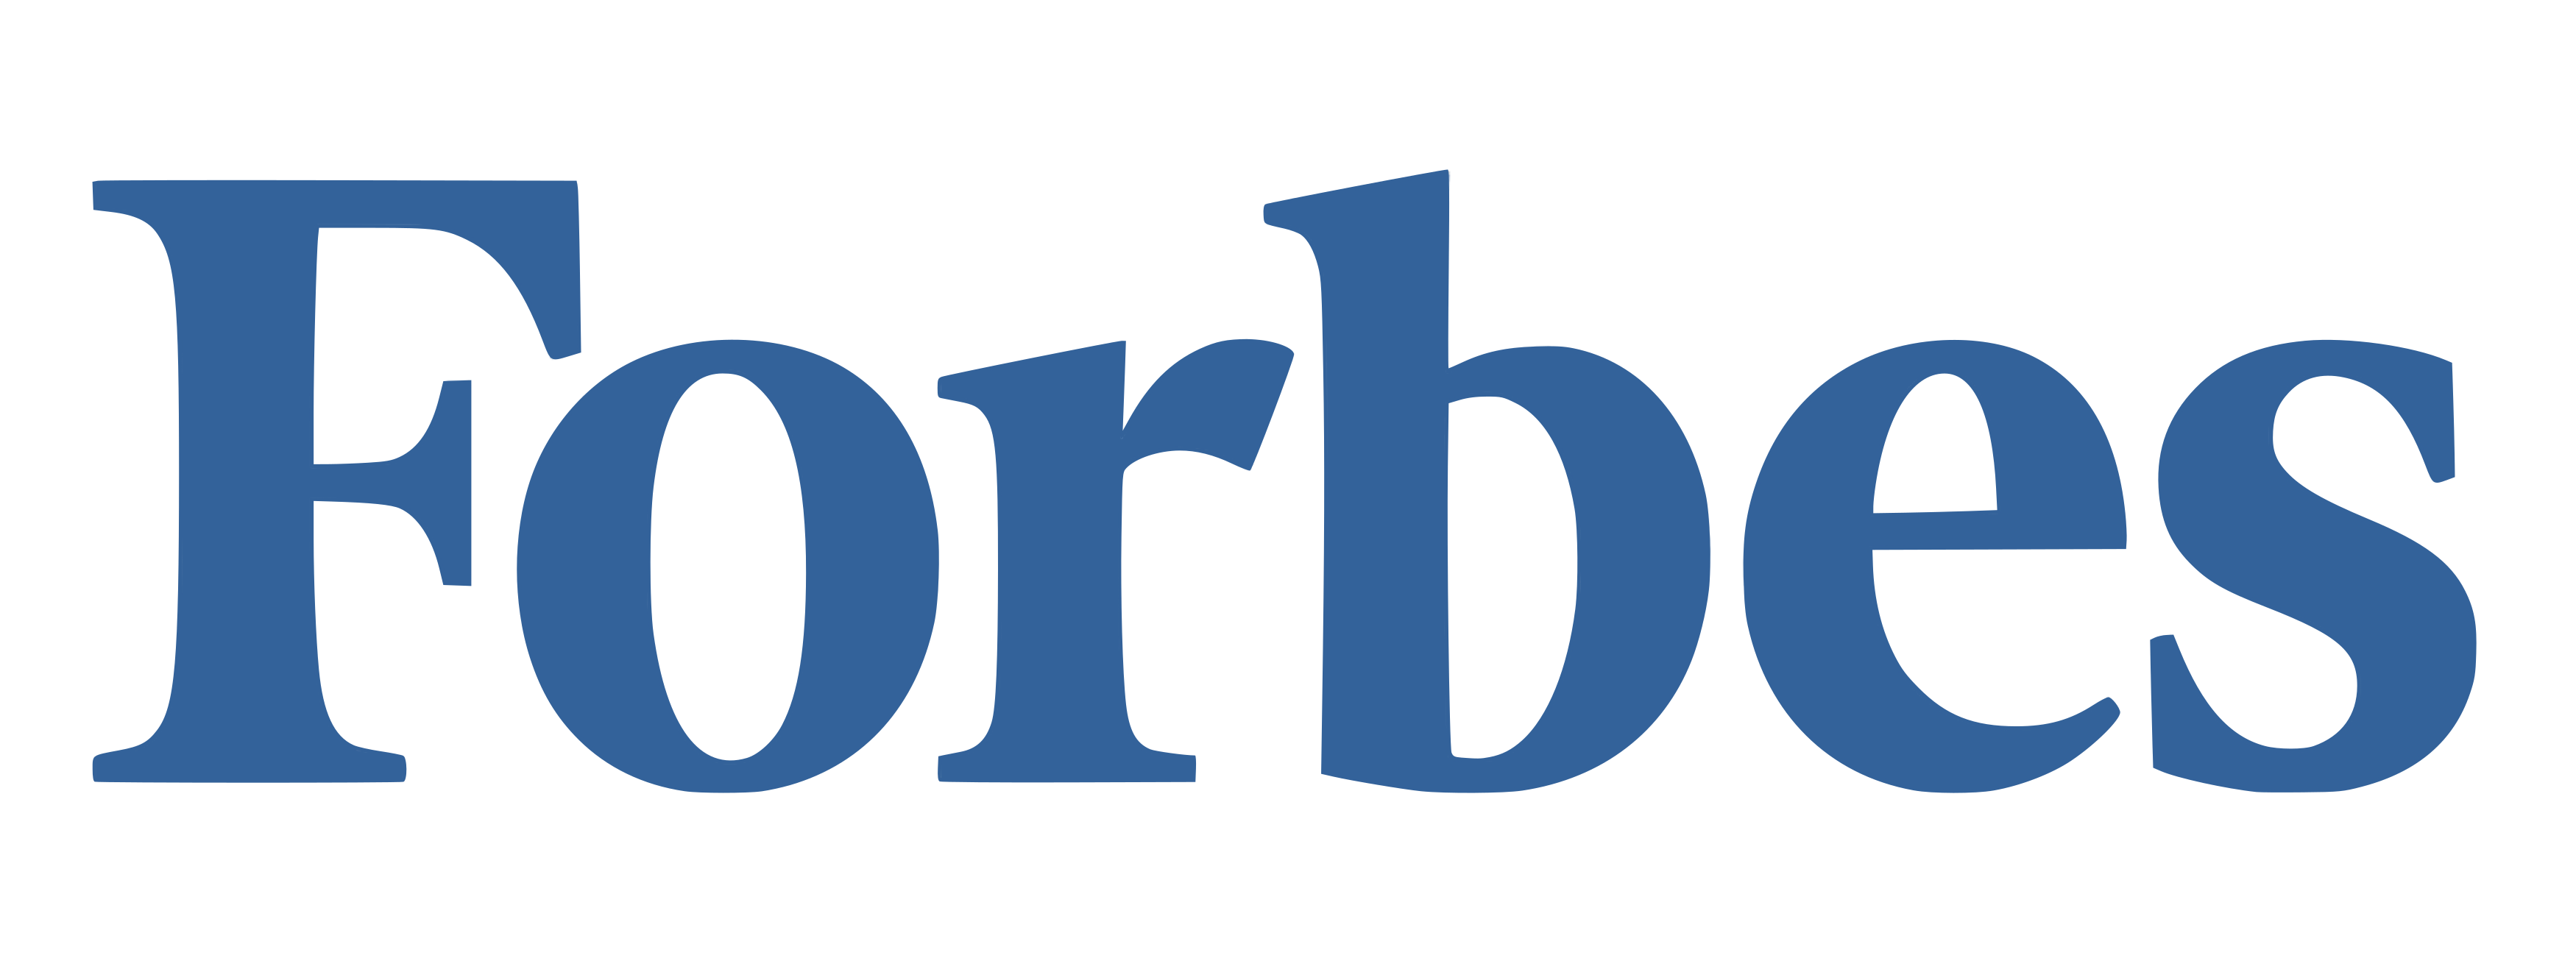 Forbes Logo Png - Alexander F